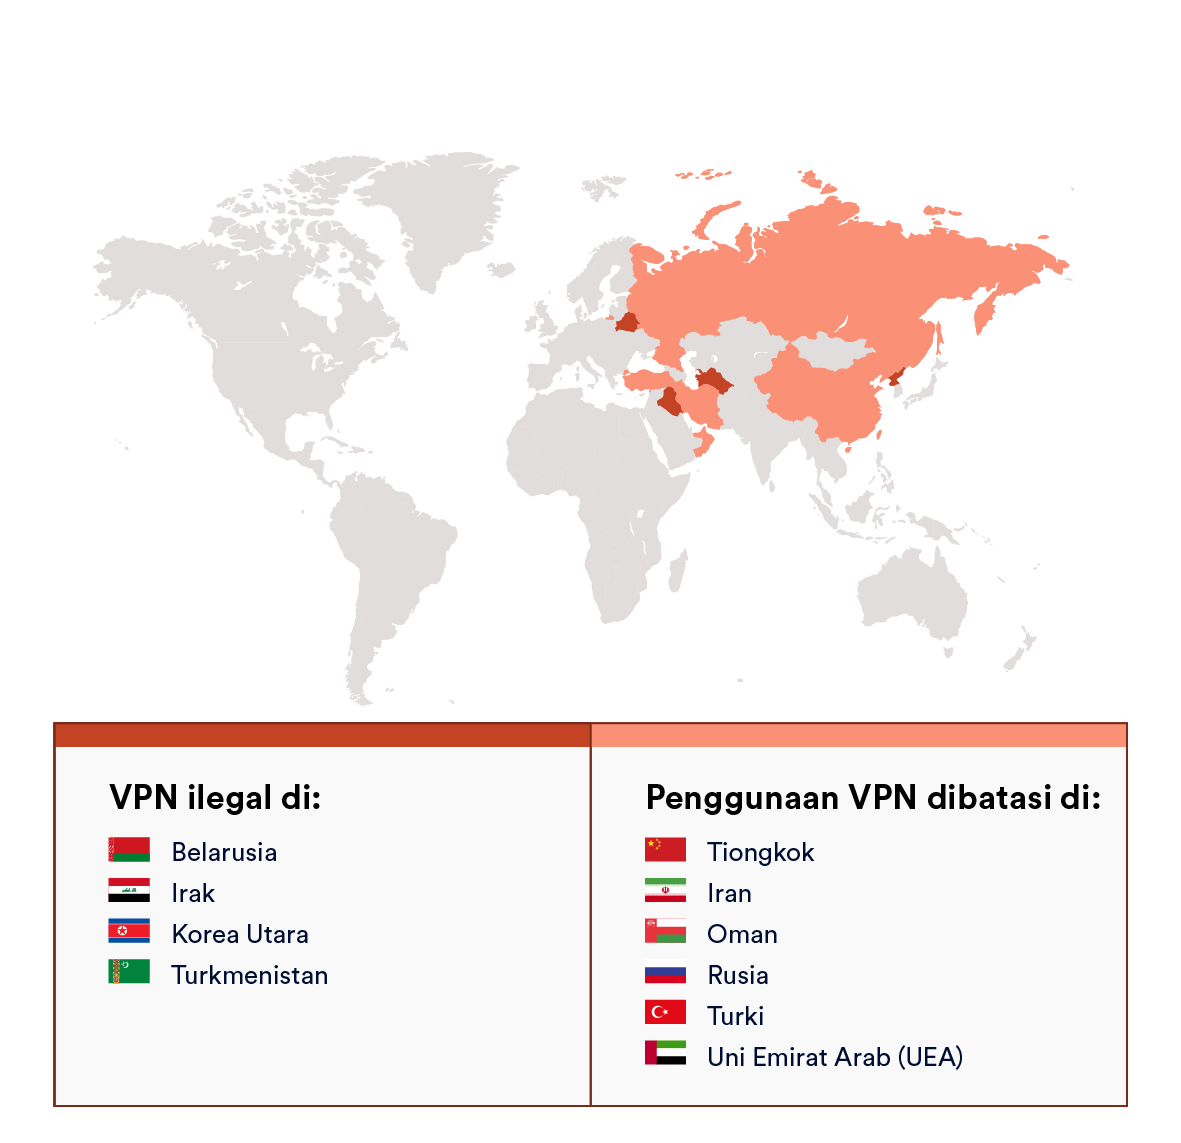 Peta yang menunjukkan negara yang menetapkan penggunaan VPN sebagai perbuatan ilegal atau dibatasi